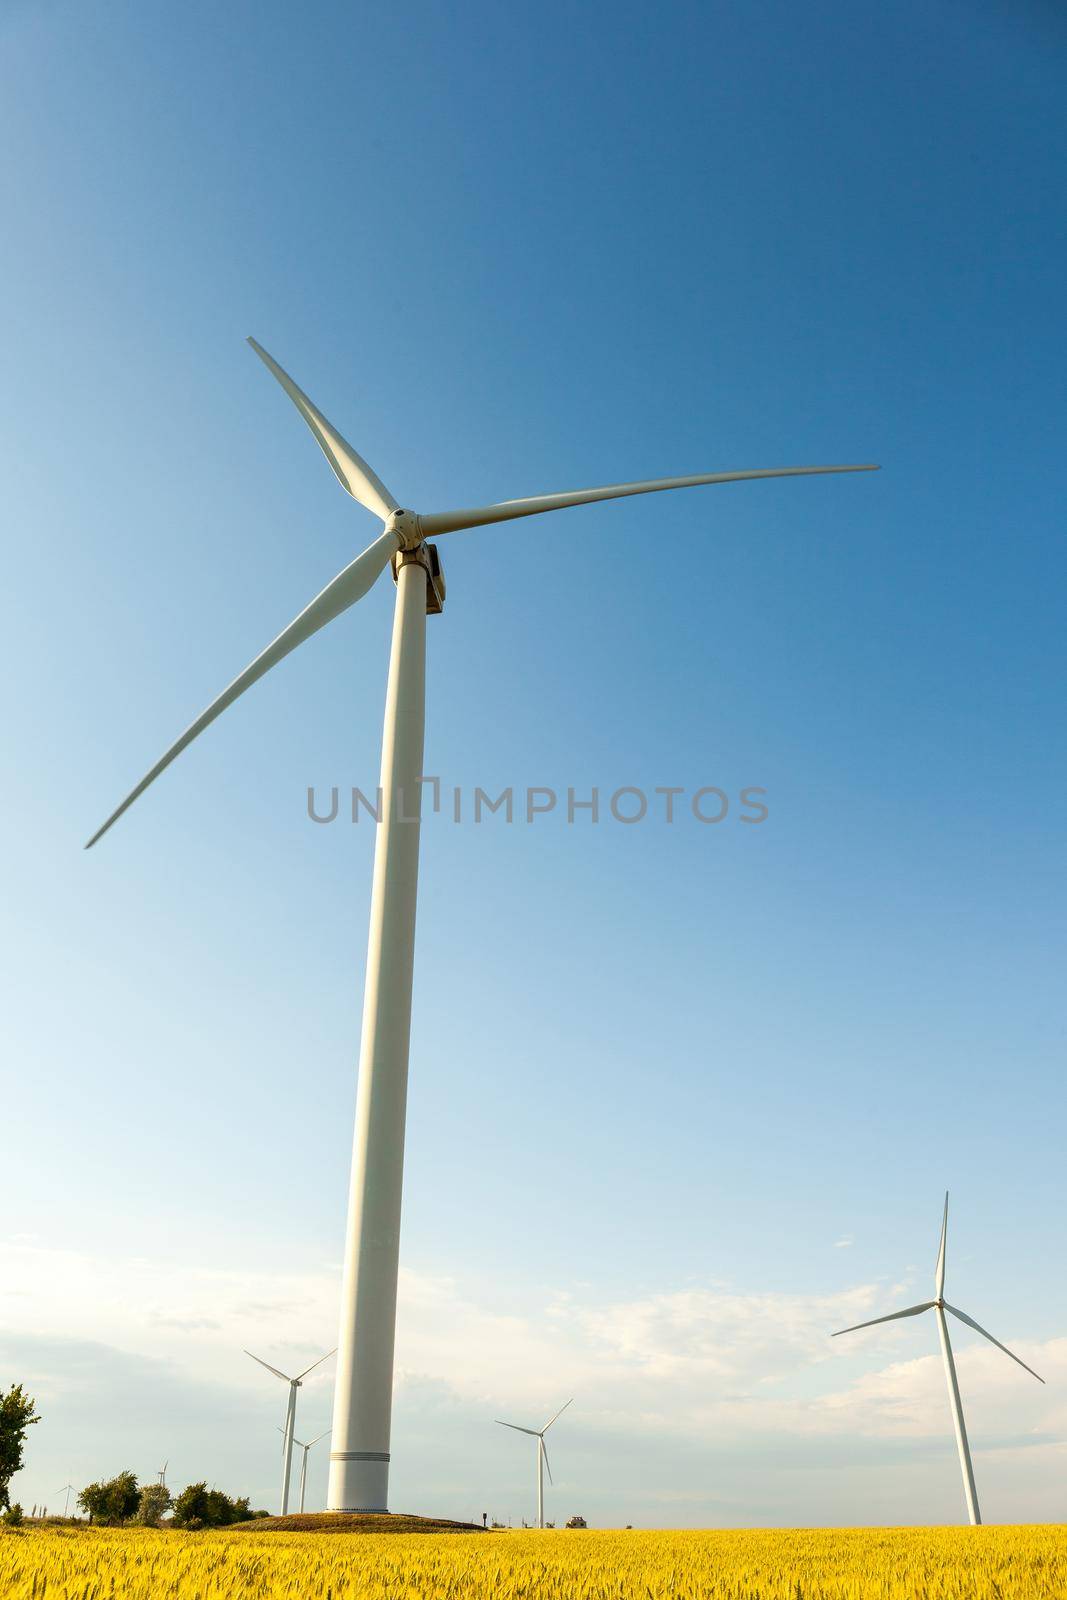 Landsape with Windmills on wheat field and blue sky by InnaVlasova